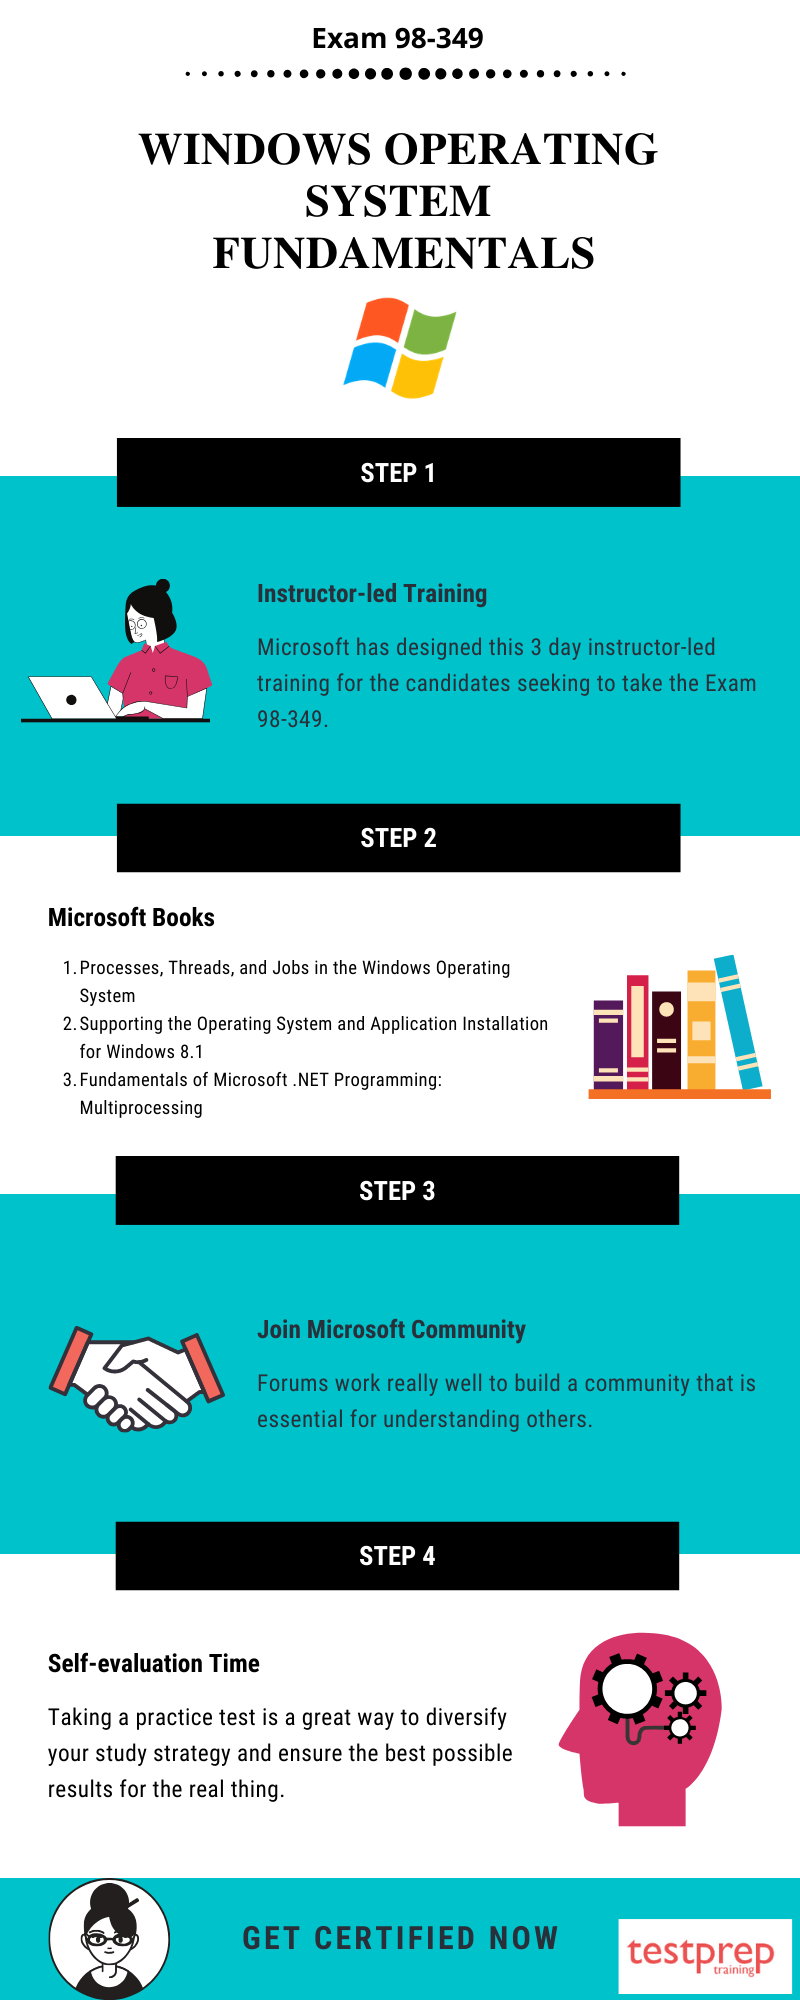 Exam 98-349: Windows Operating System Fundamentals -Study Guide